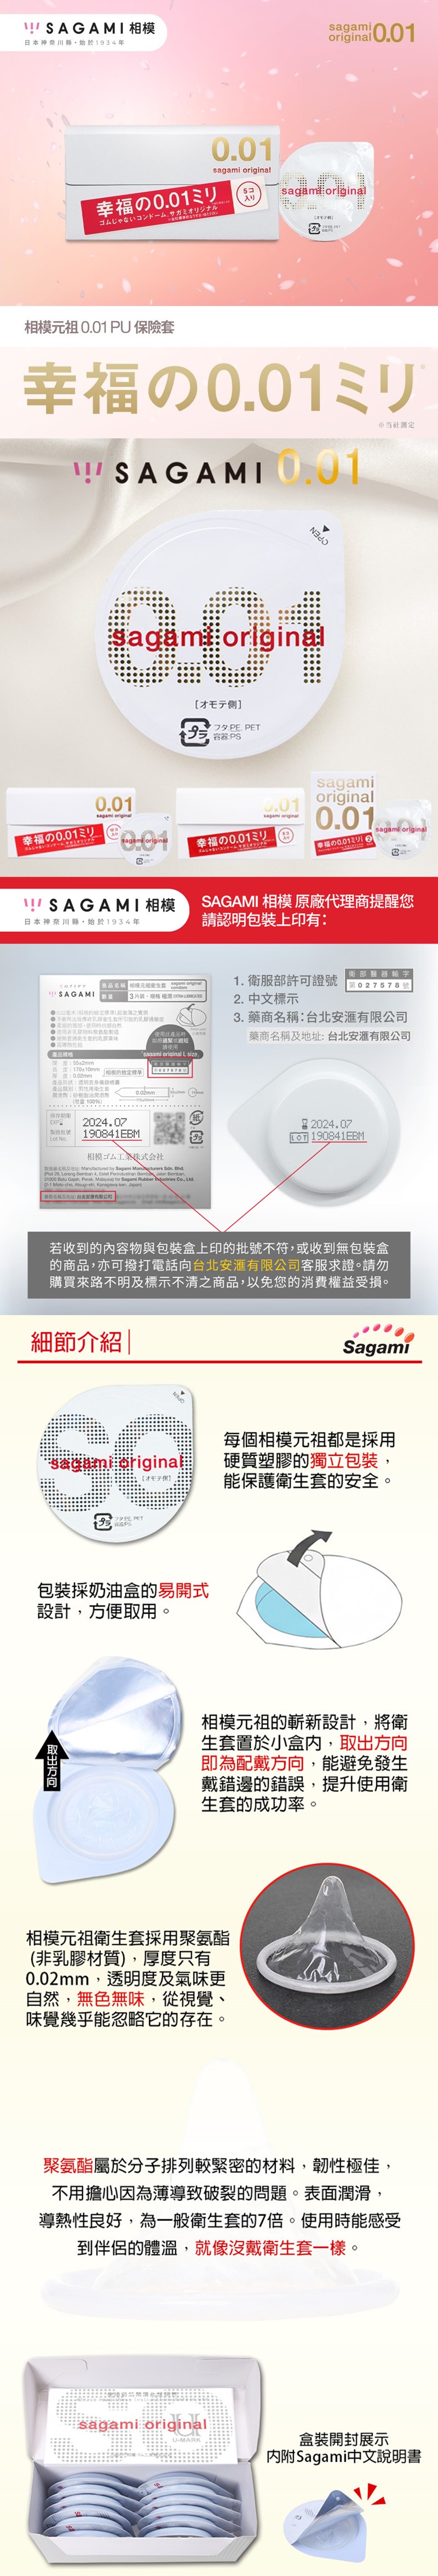 sagami 相模元祖 001 極致薄 55mm 保險套 1入裝 長條圖 800X800.jpg